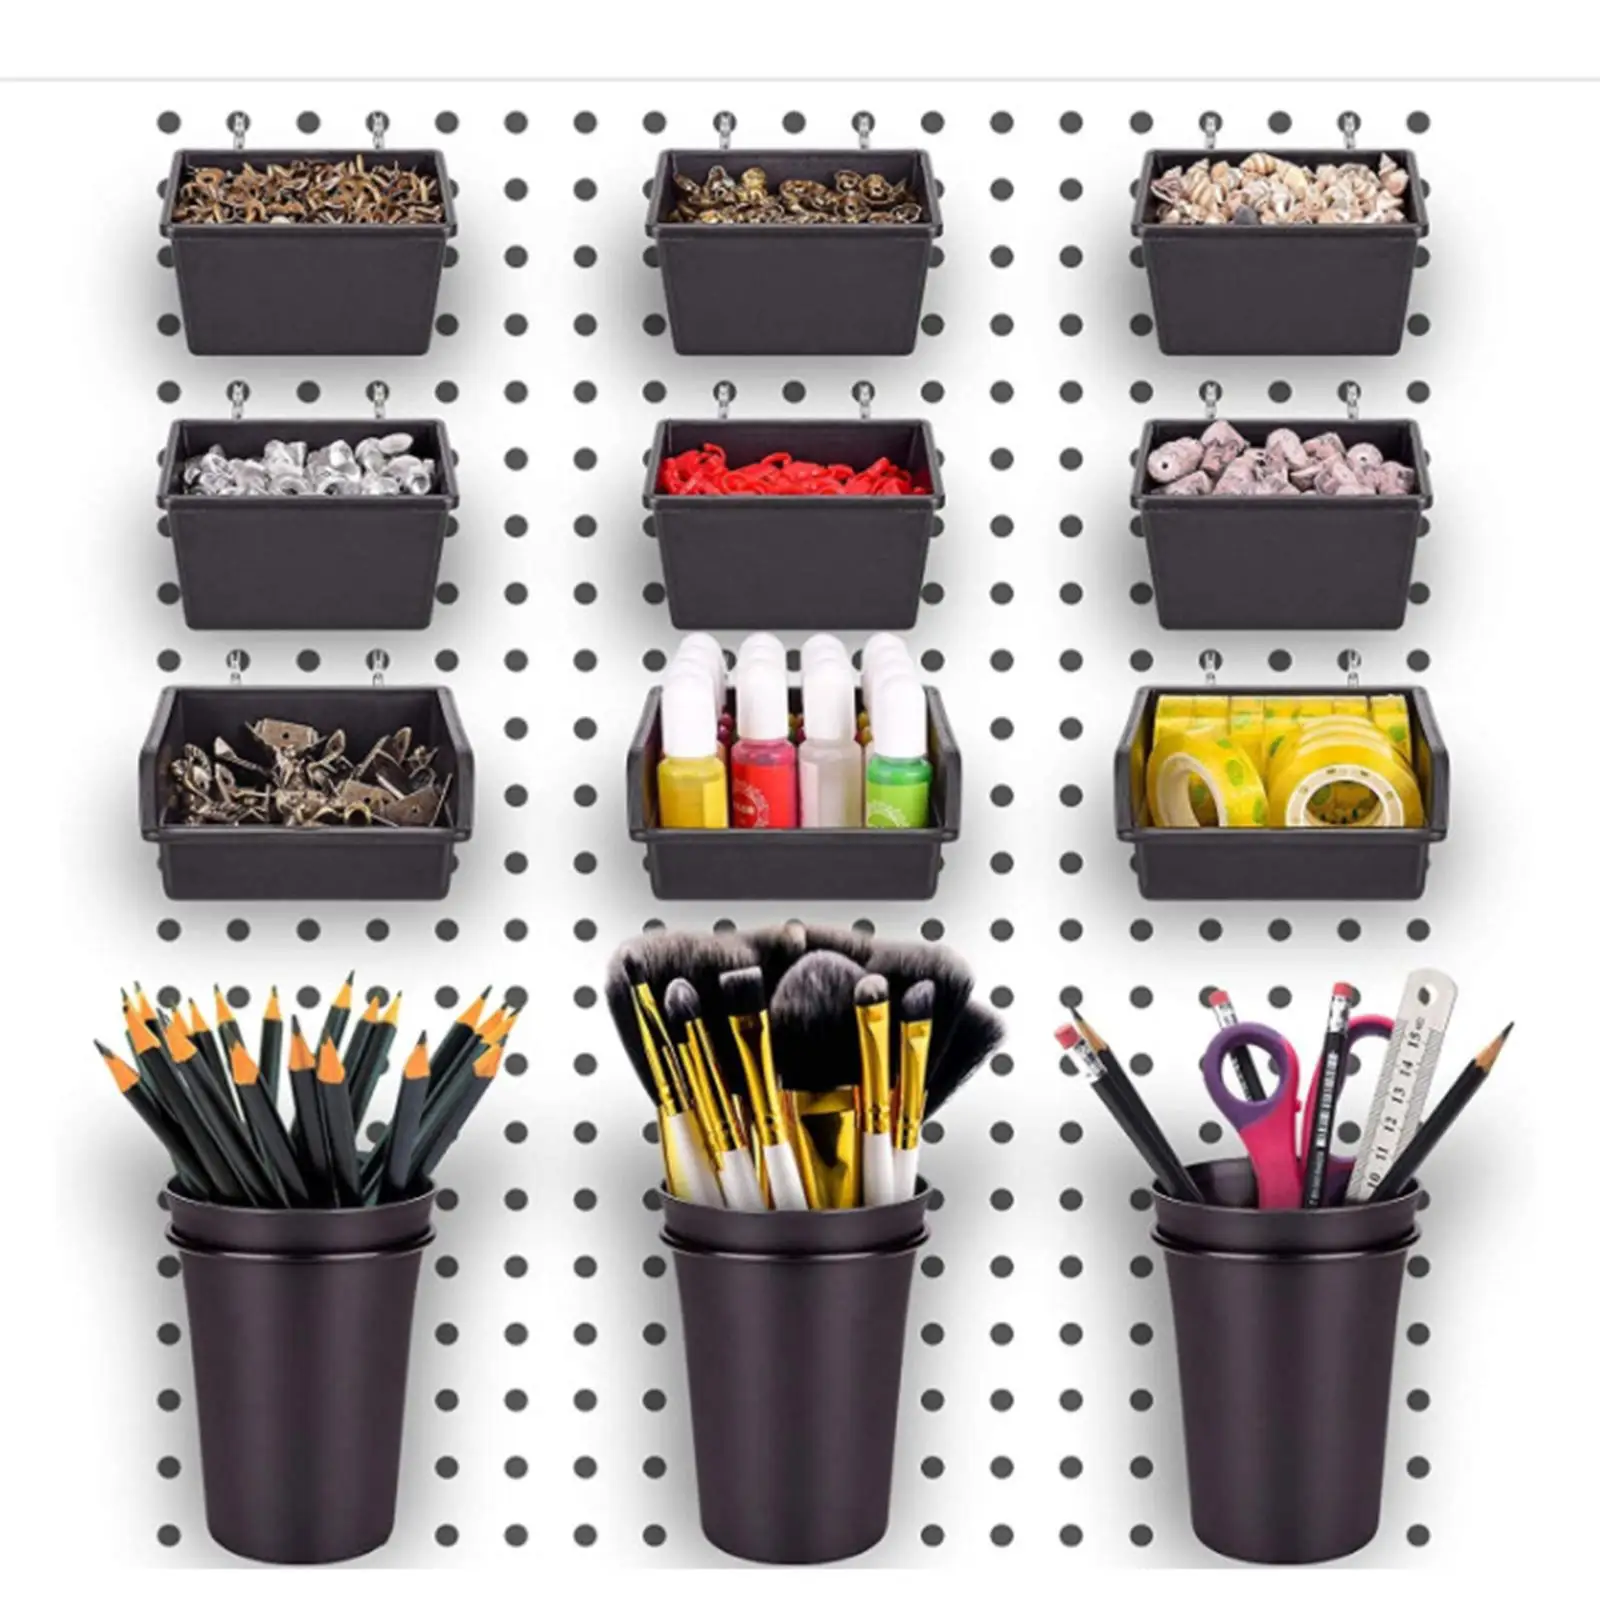 Organize Hardware Accessories Tool Parts and Craft Organizer for Garage